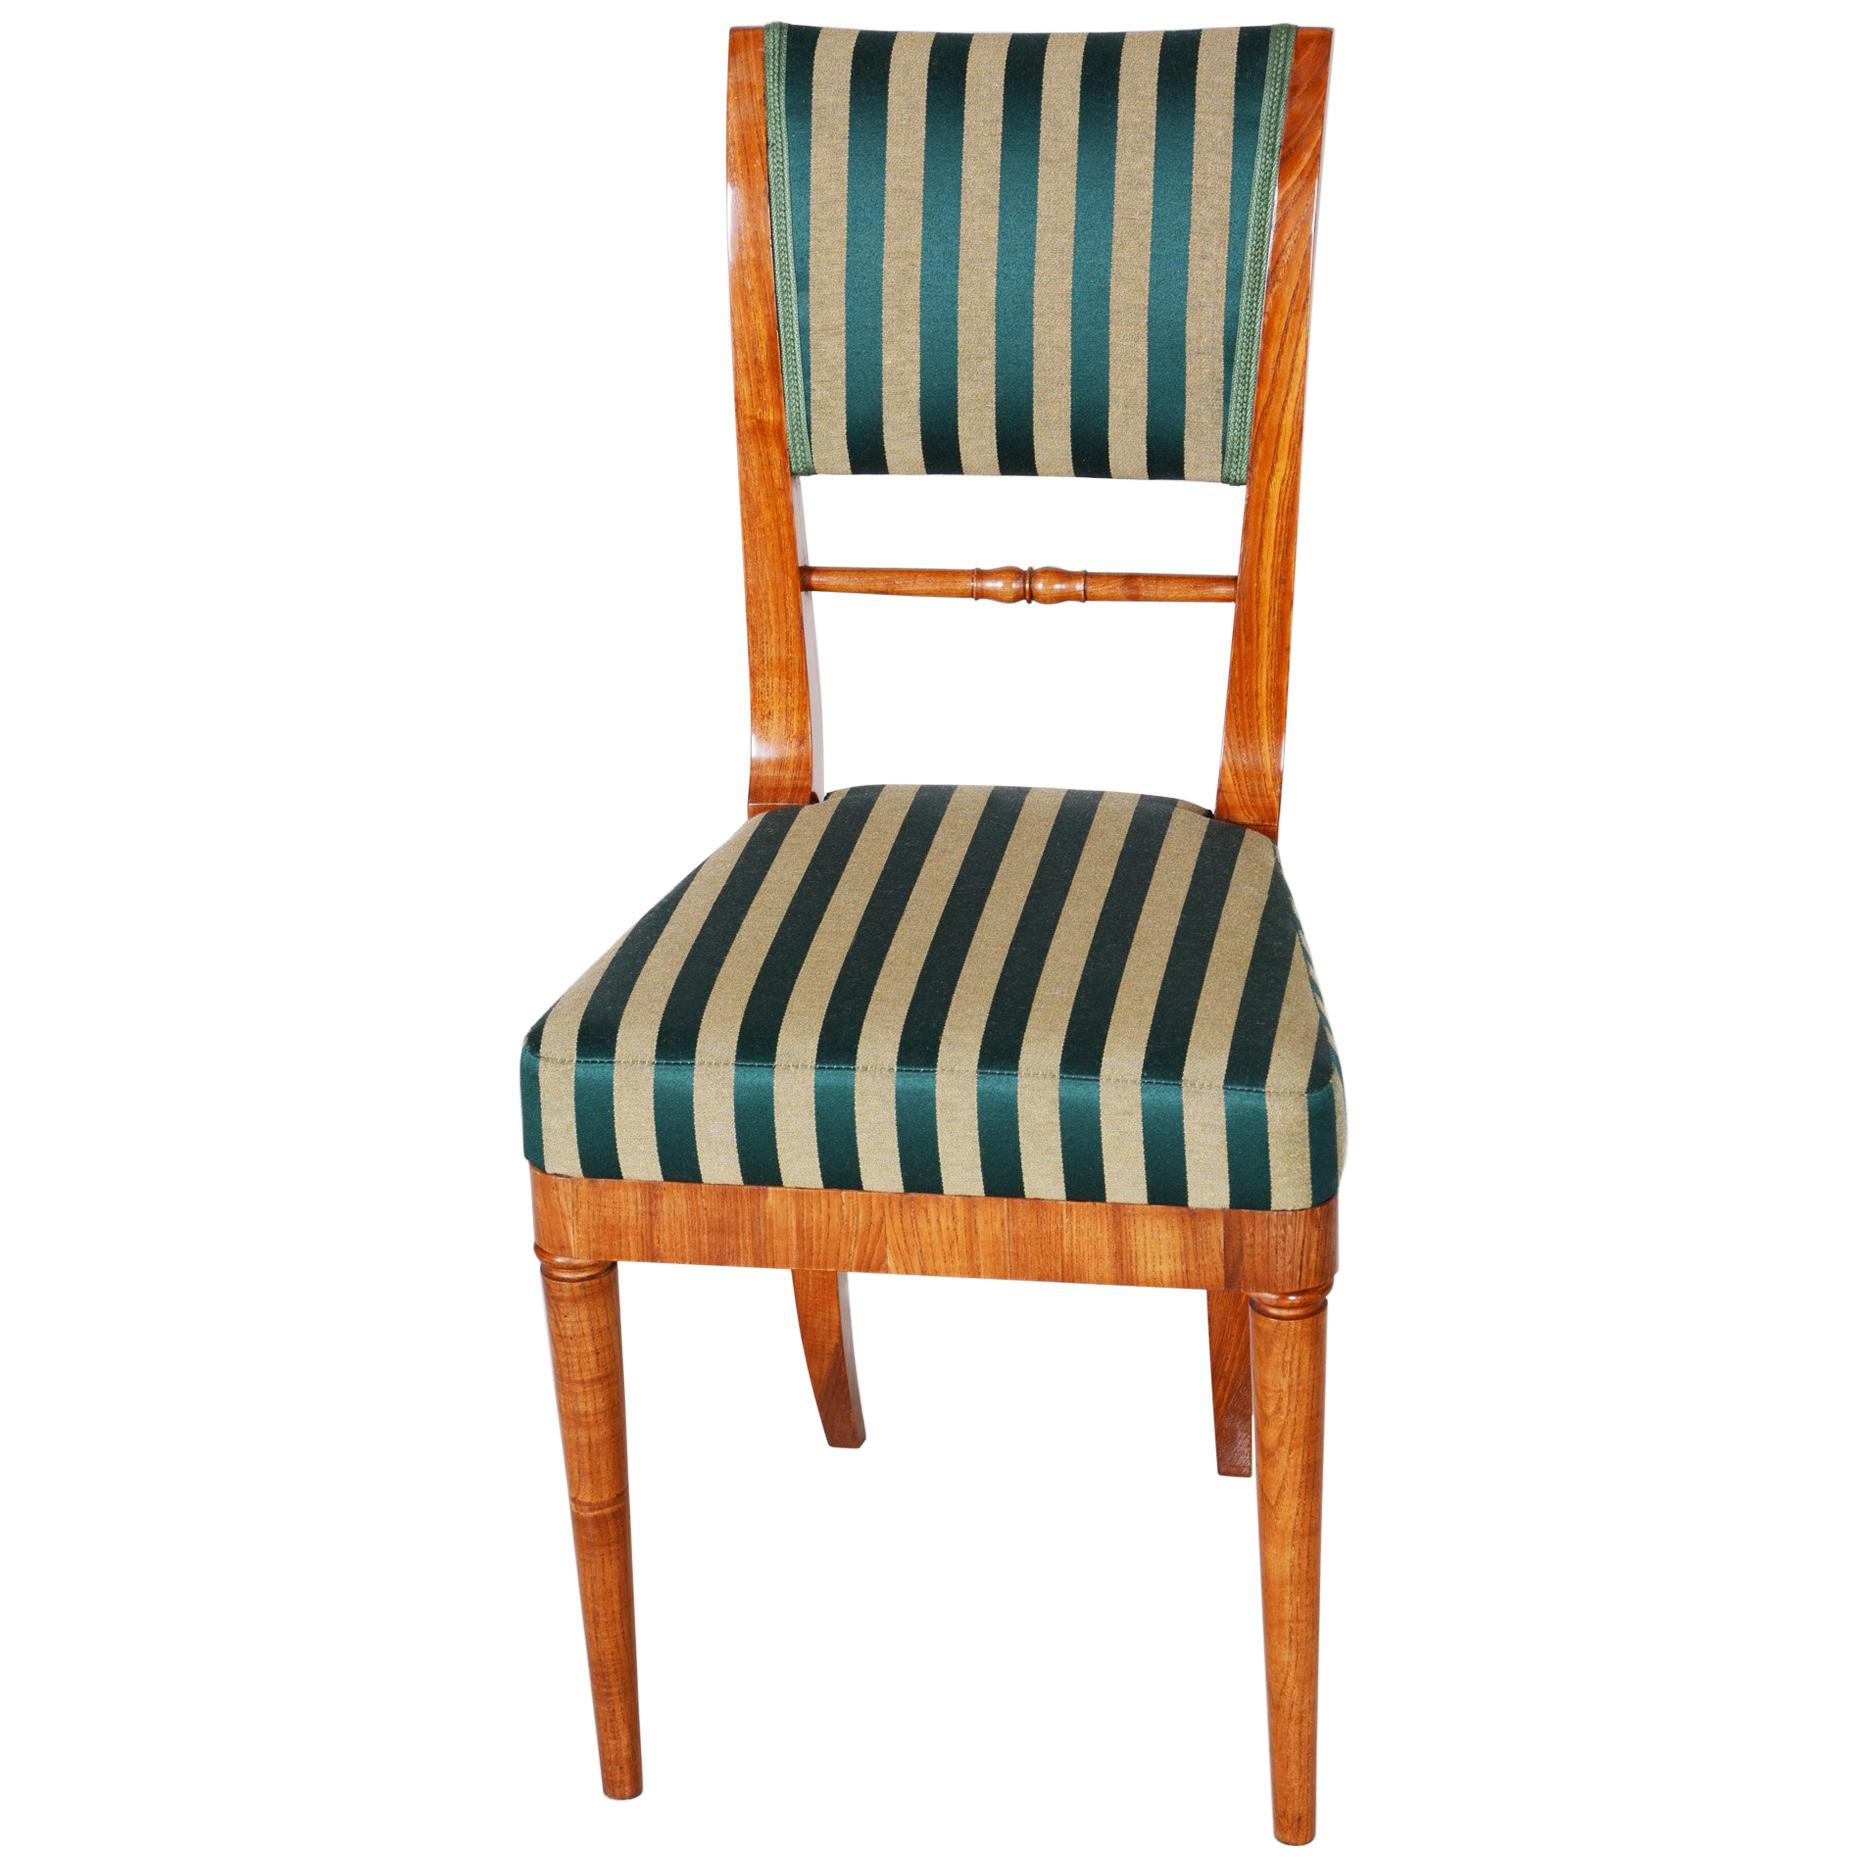 19th Century Czech Elm Biedermeier Chair, Bohemia, Period 1830 - 1839